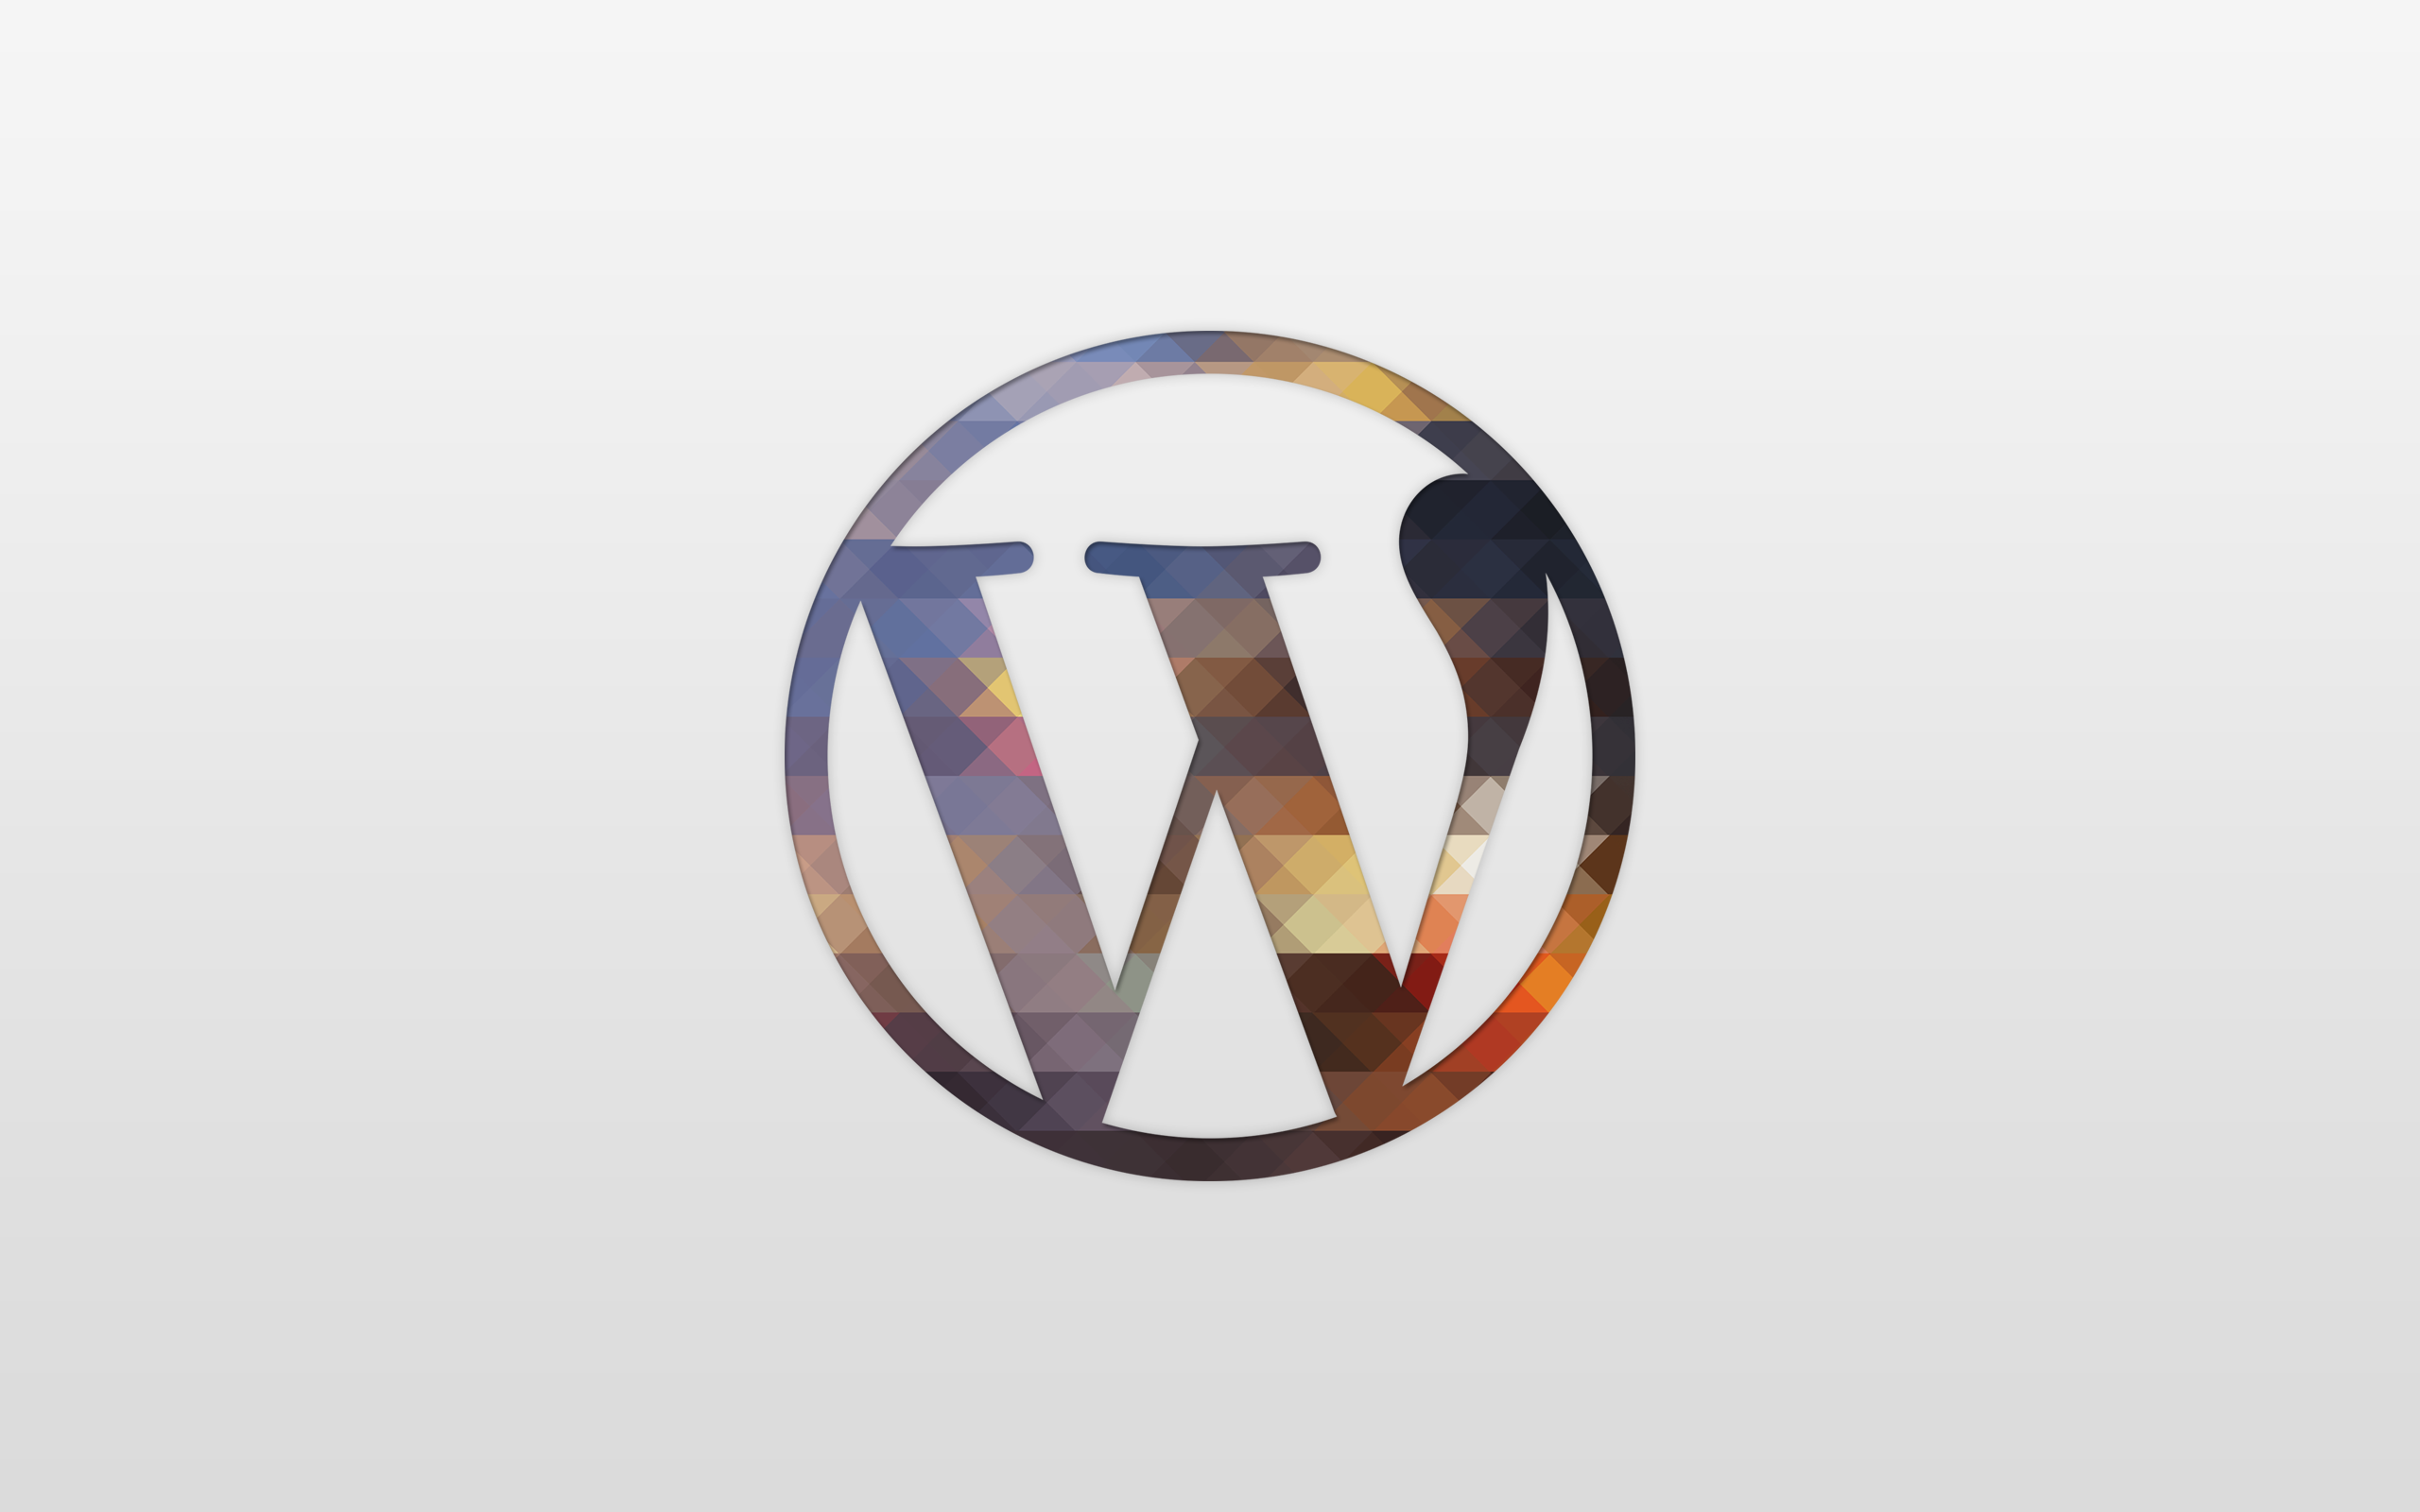 200+ Free WordPress & Blog Images - Pixabay